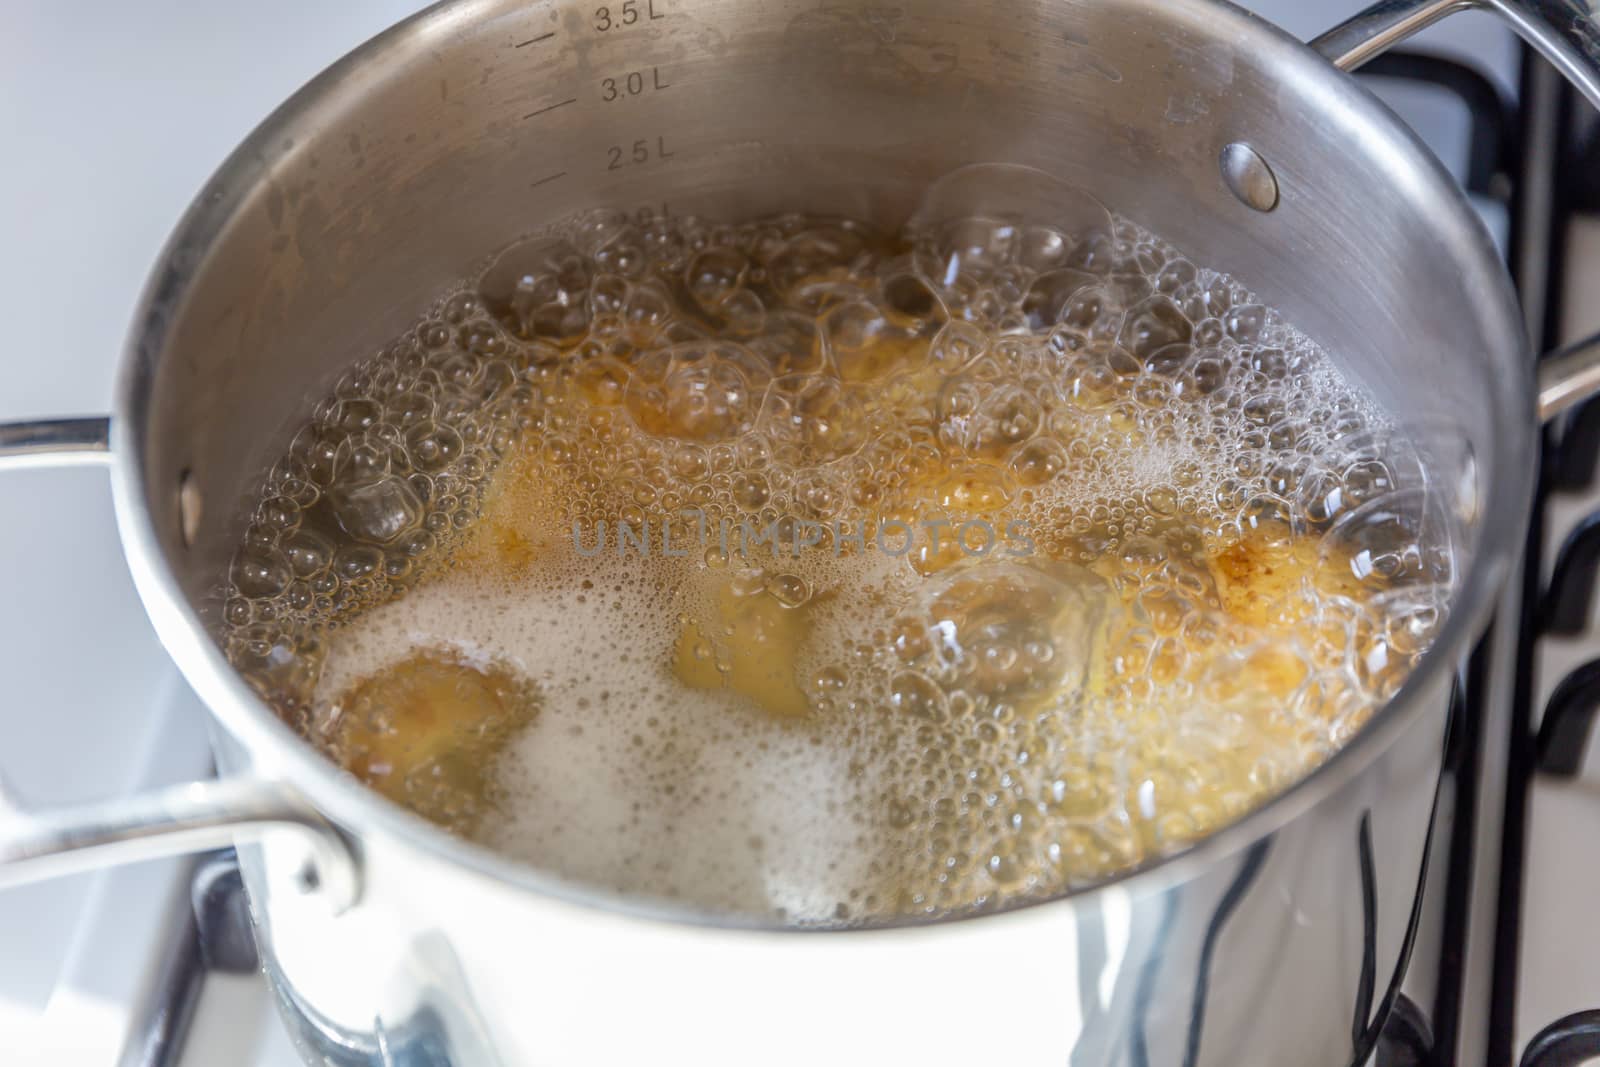 Pan of potatoes cooking in boiling water by magicbones